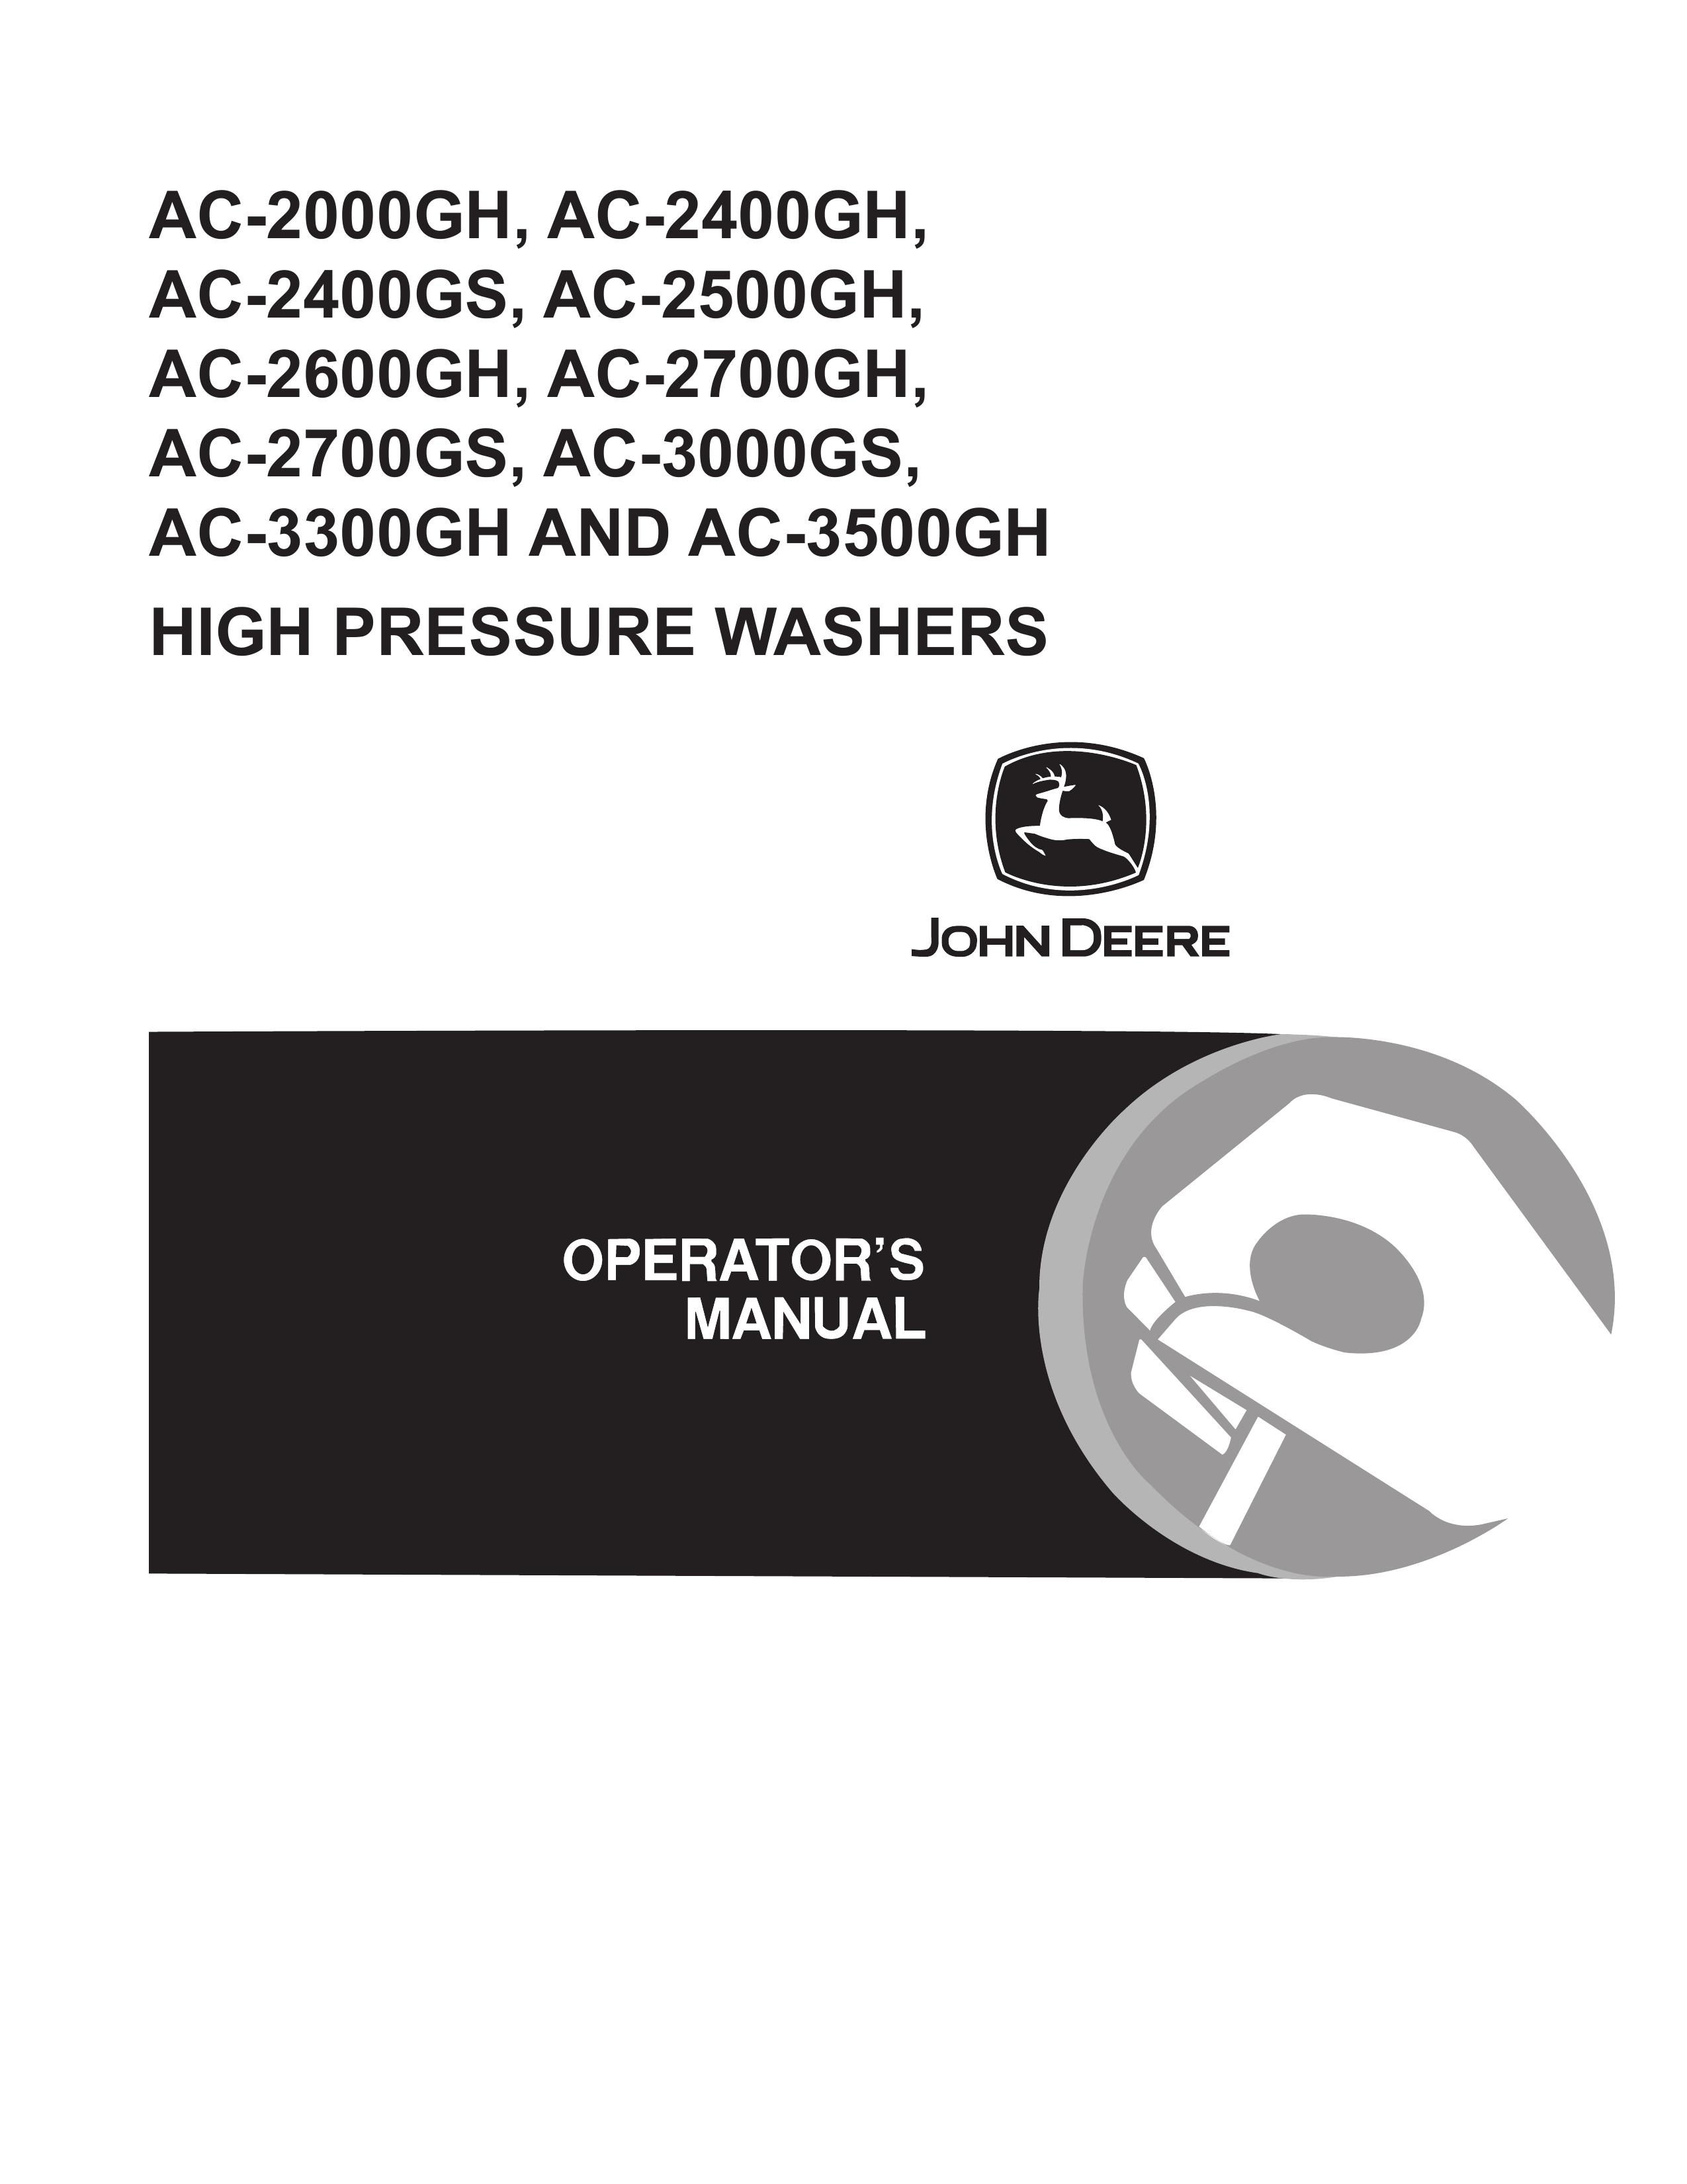 John Deere AC-3000GS Washer User Manual